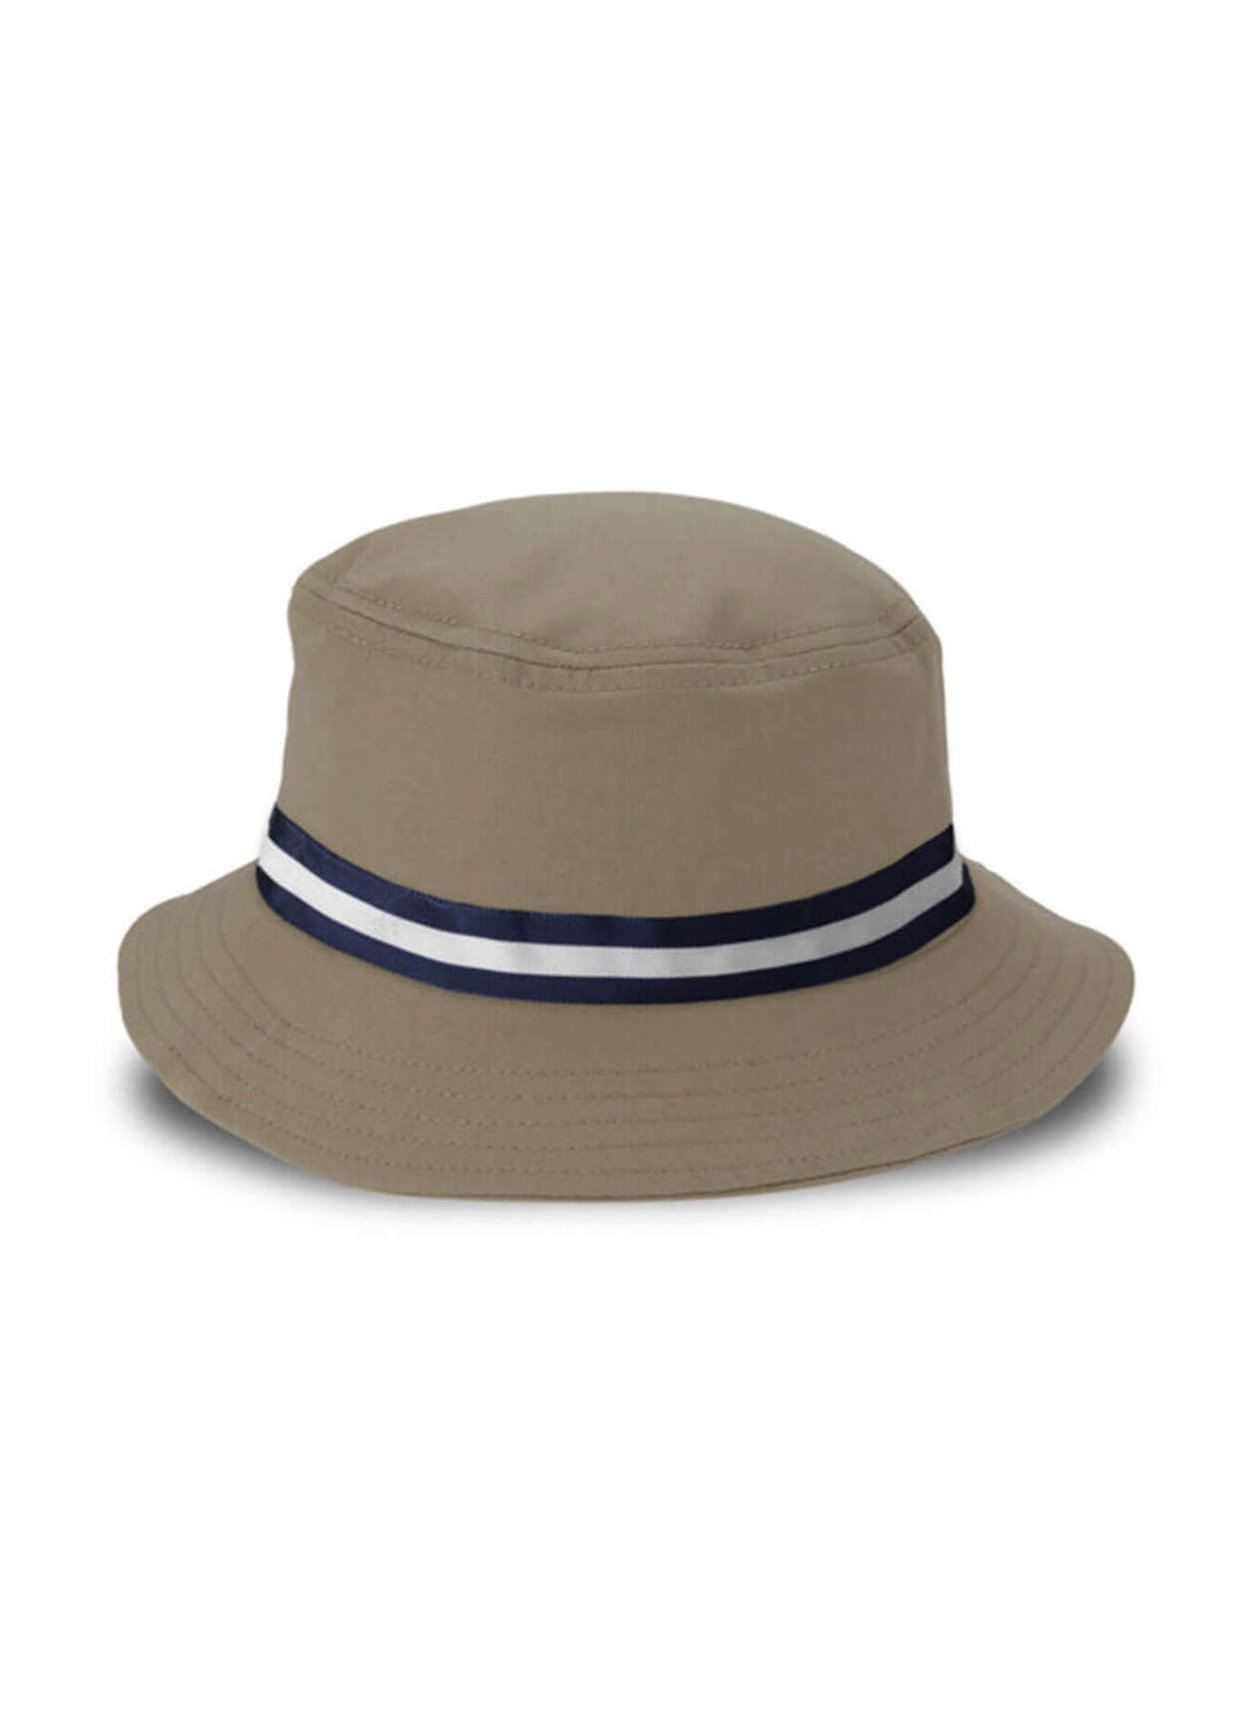 Imperial Khaki / Navy / White The Oxford Bucket Hat